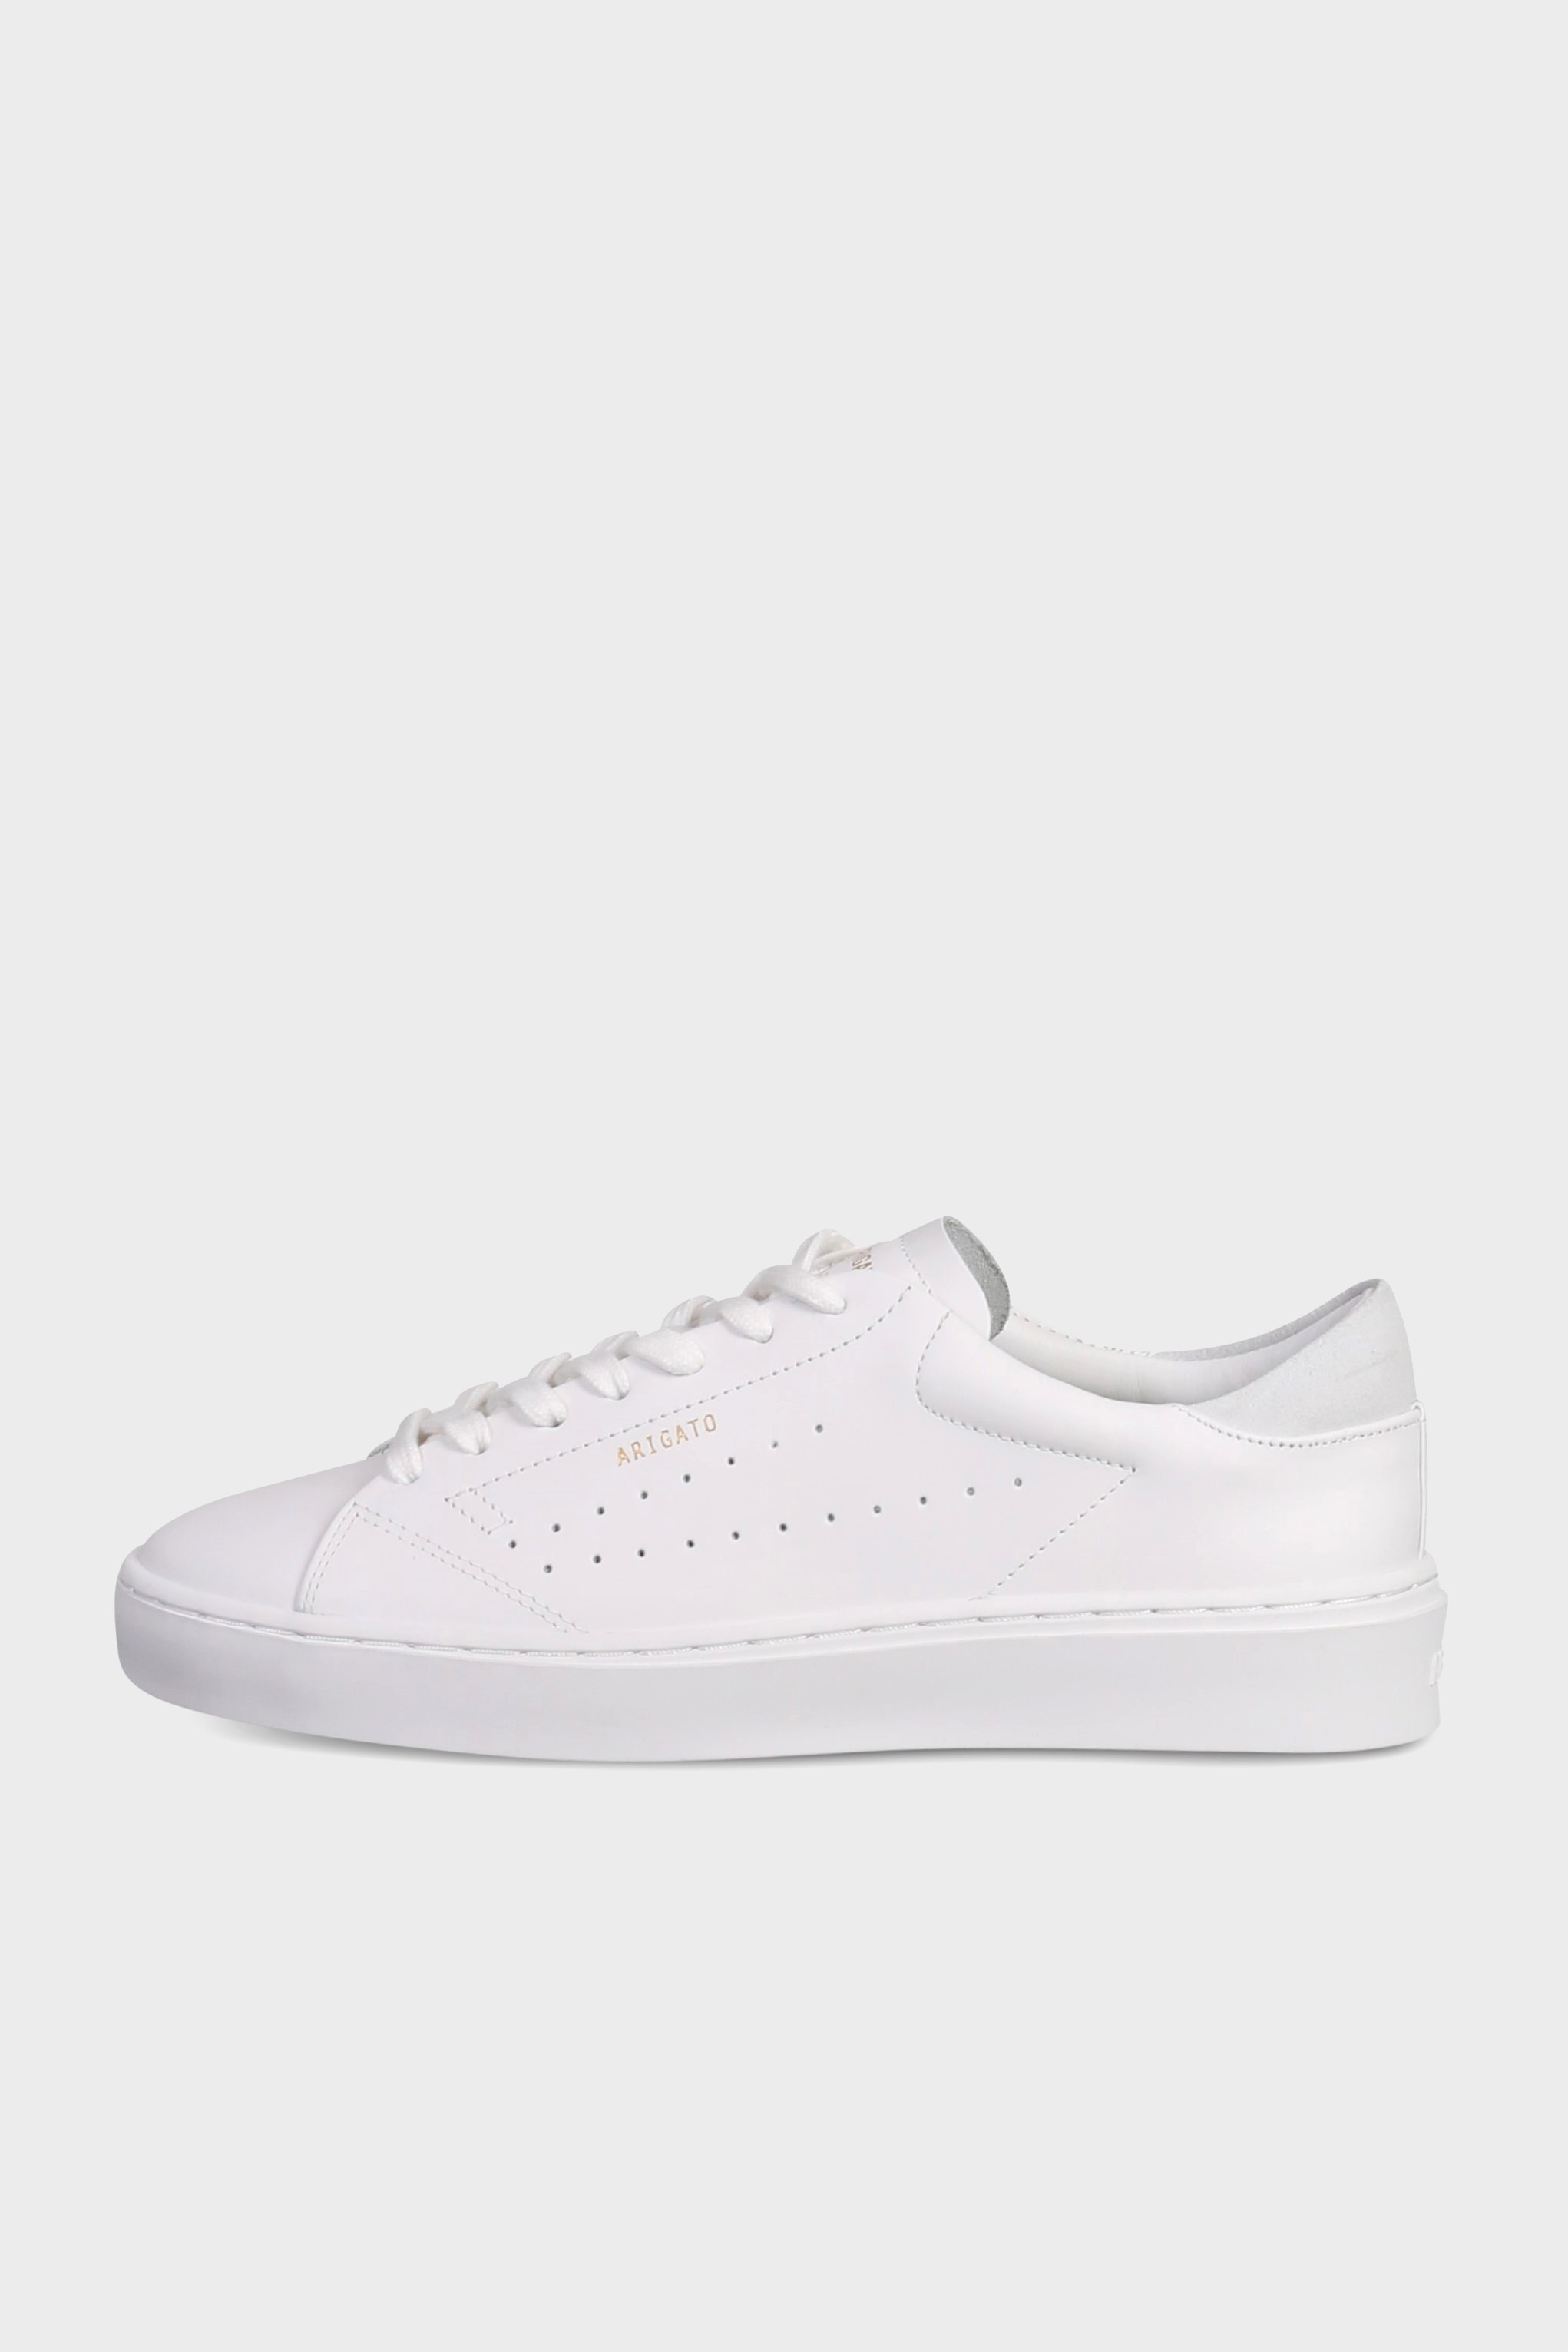 AXEL ARIGATO Court Sneaker in White/Light Grey 42